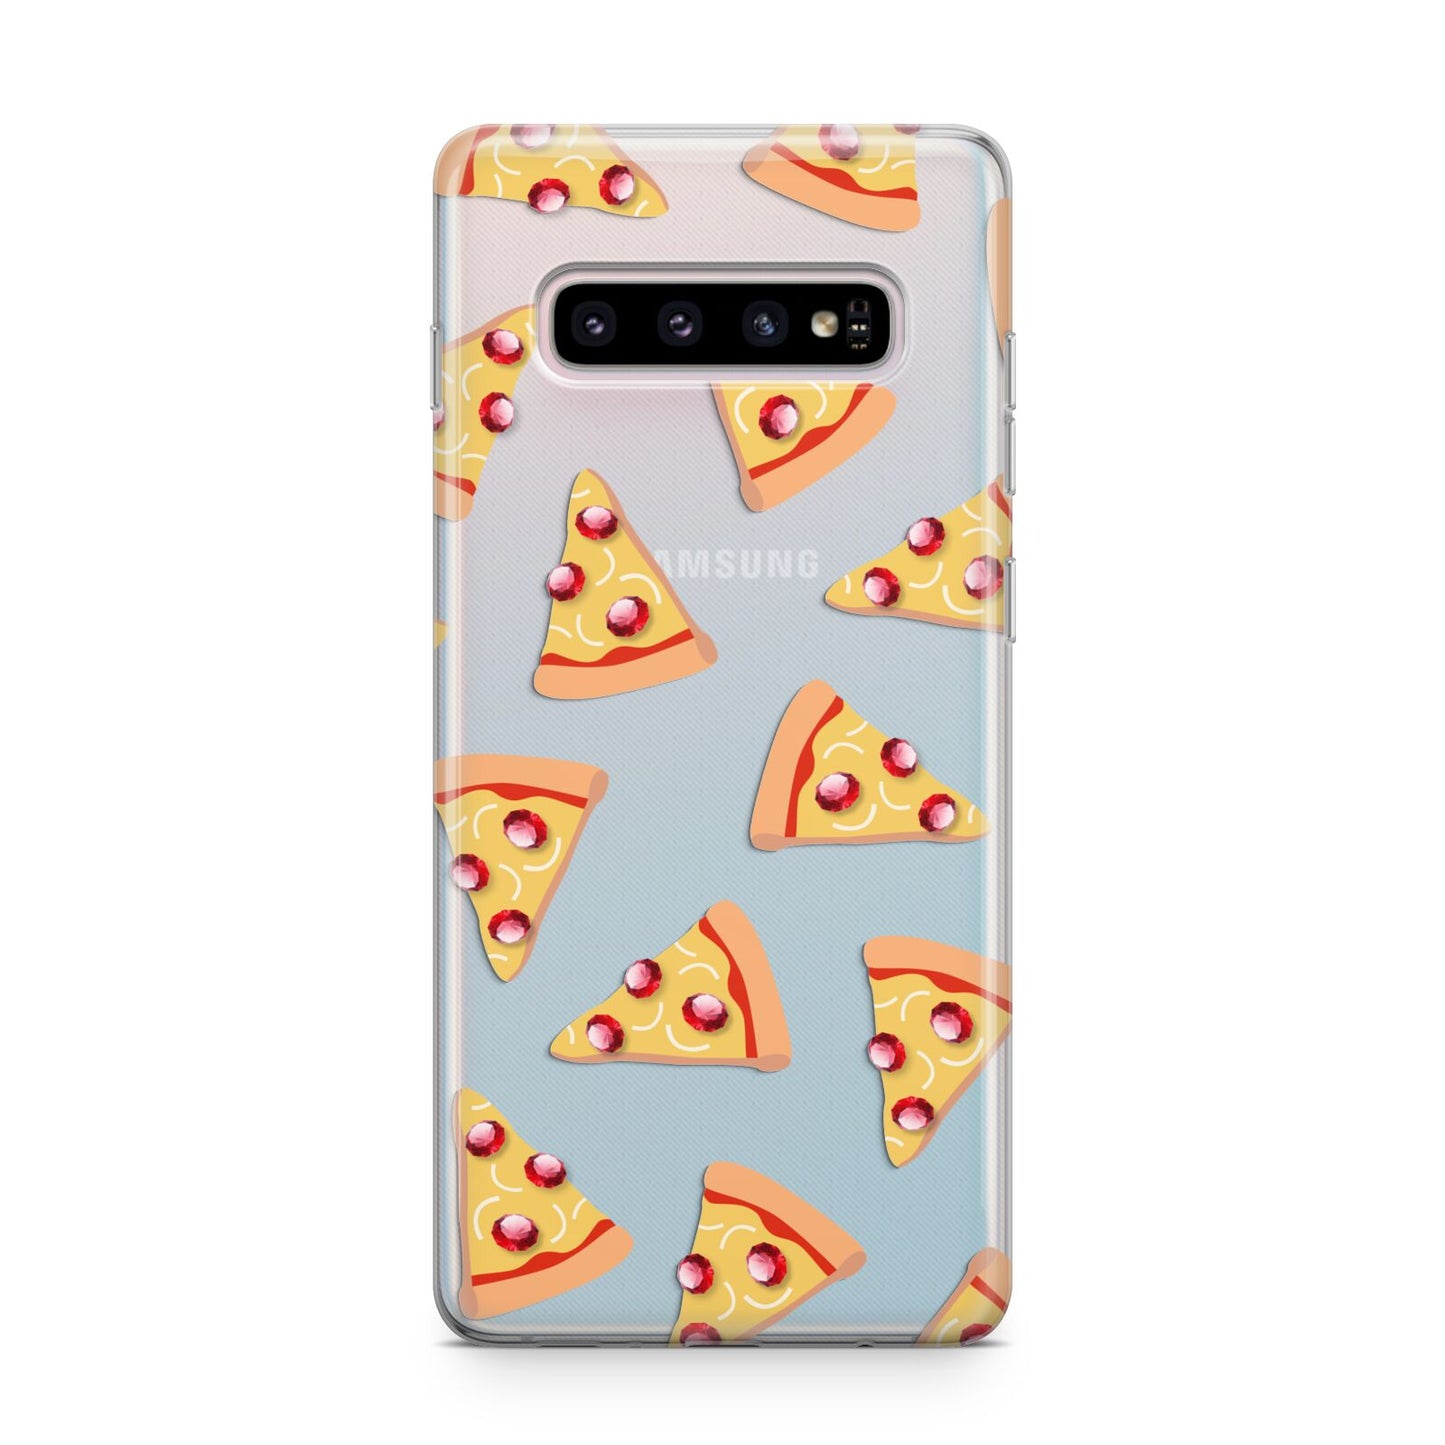 Rubies on Cartoon Pizza Slices Samsung Galaxy S10 Plus Case